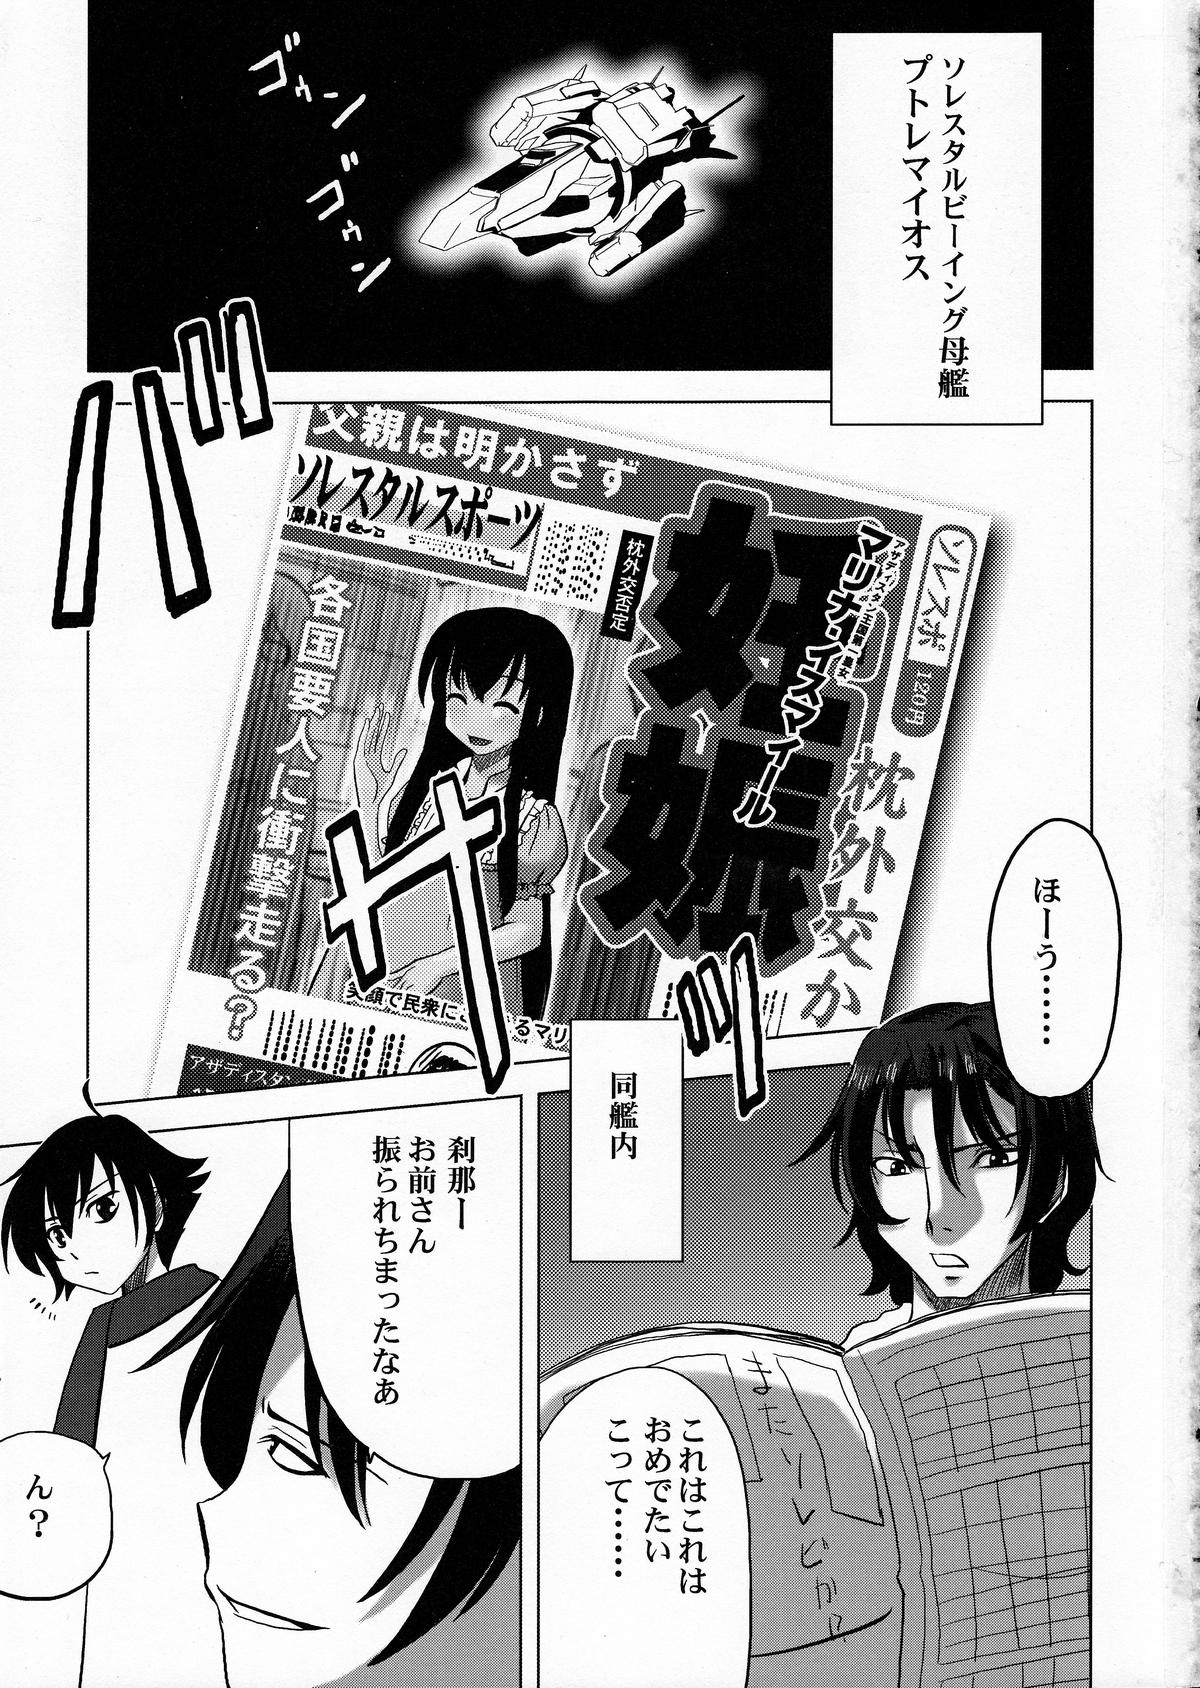 Athletic Maguro Kingdom 2009 - Gundam 00 Punheta - Page 2